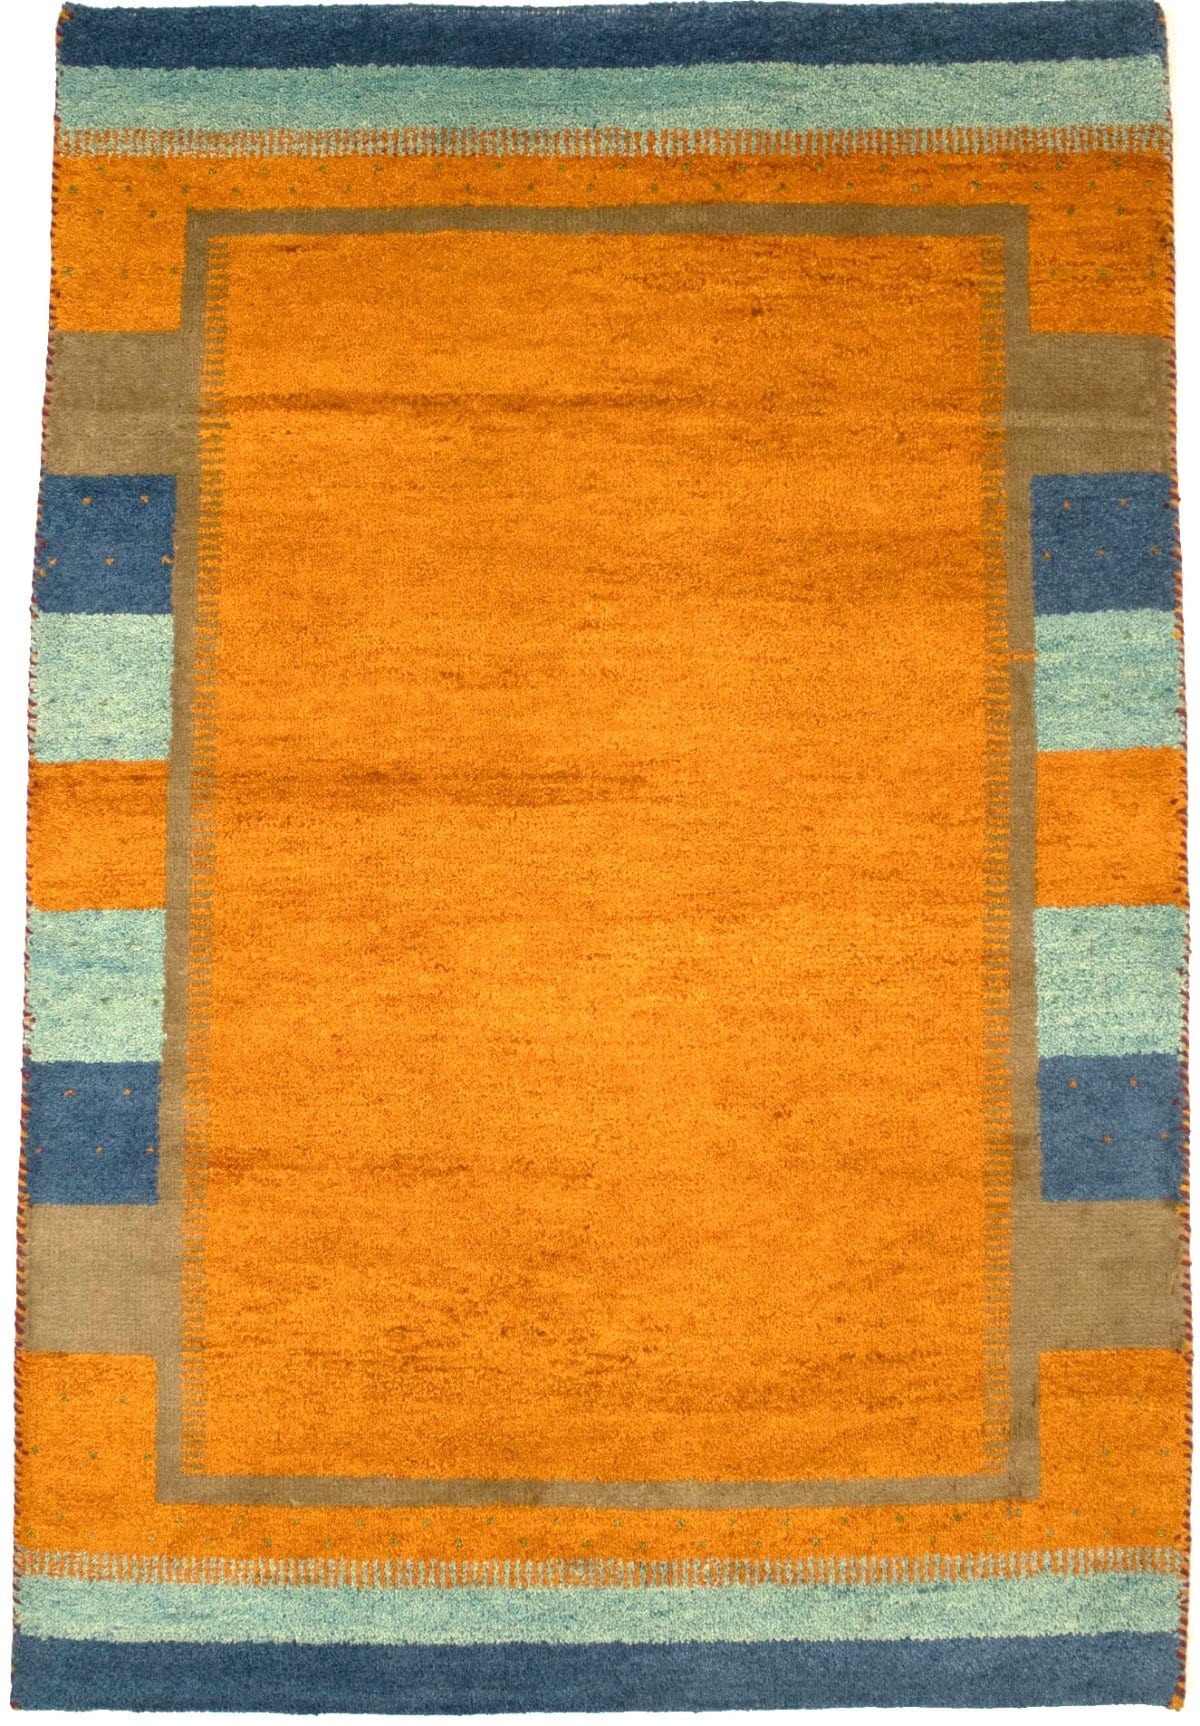 Tangerine Orange Tribal 4X6 Indo-Gabbeh Oriental Rug